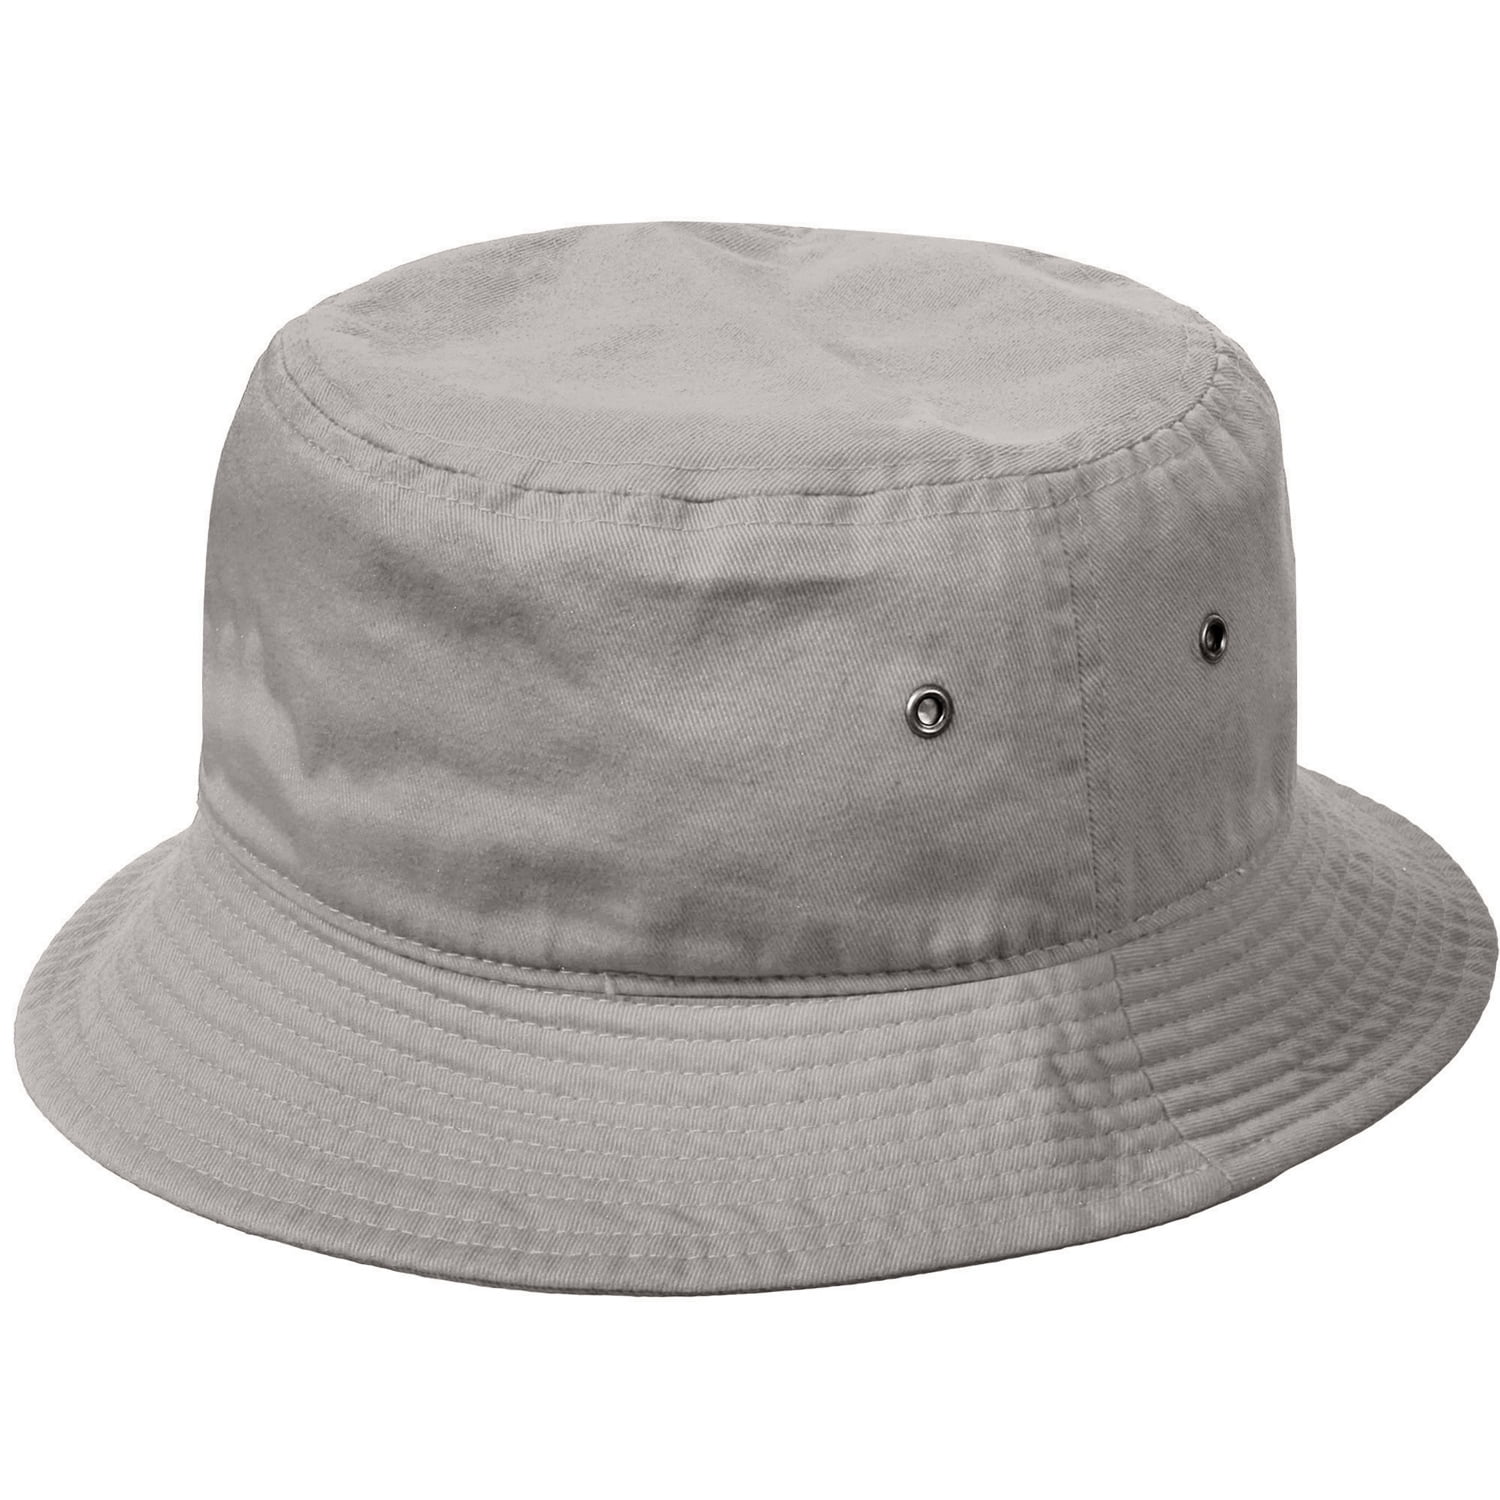 Hat 100% Women Foldable Cotton Packable Men Travel SM Beach for Hat - Unisex Summer Bucket Fishing Outdoor Grey